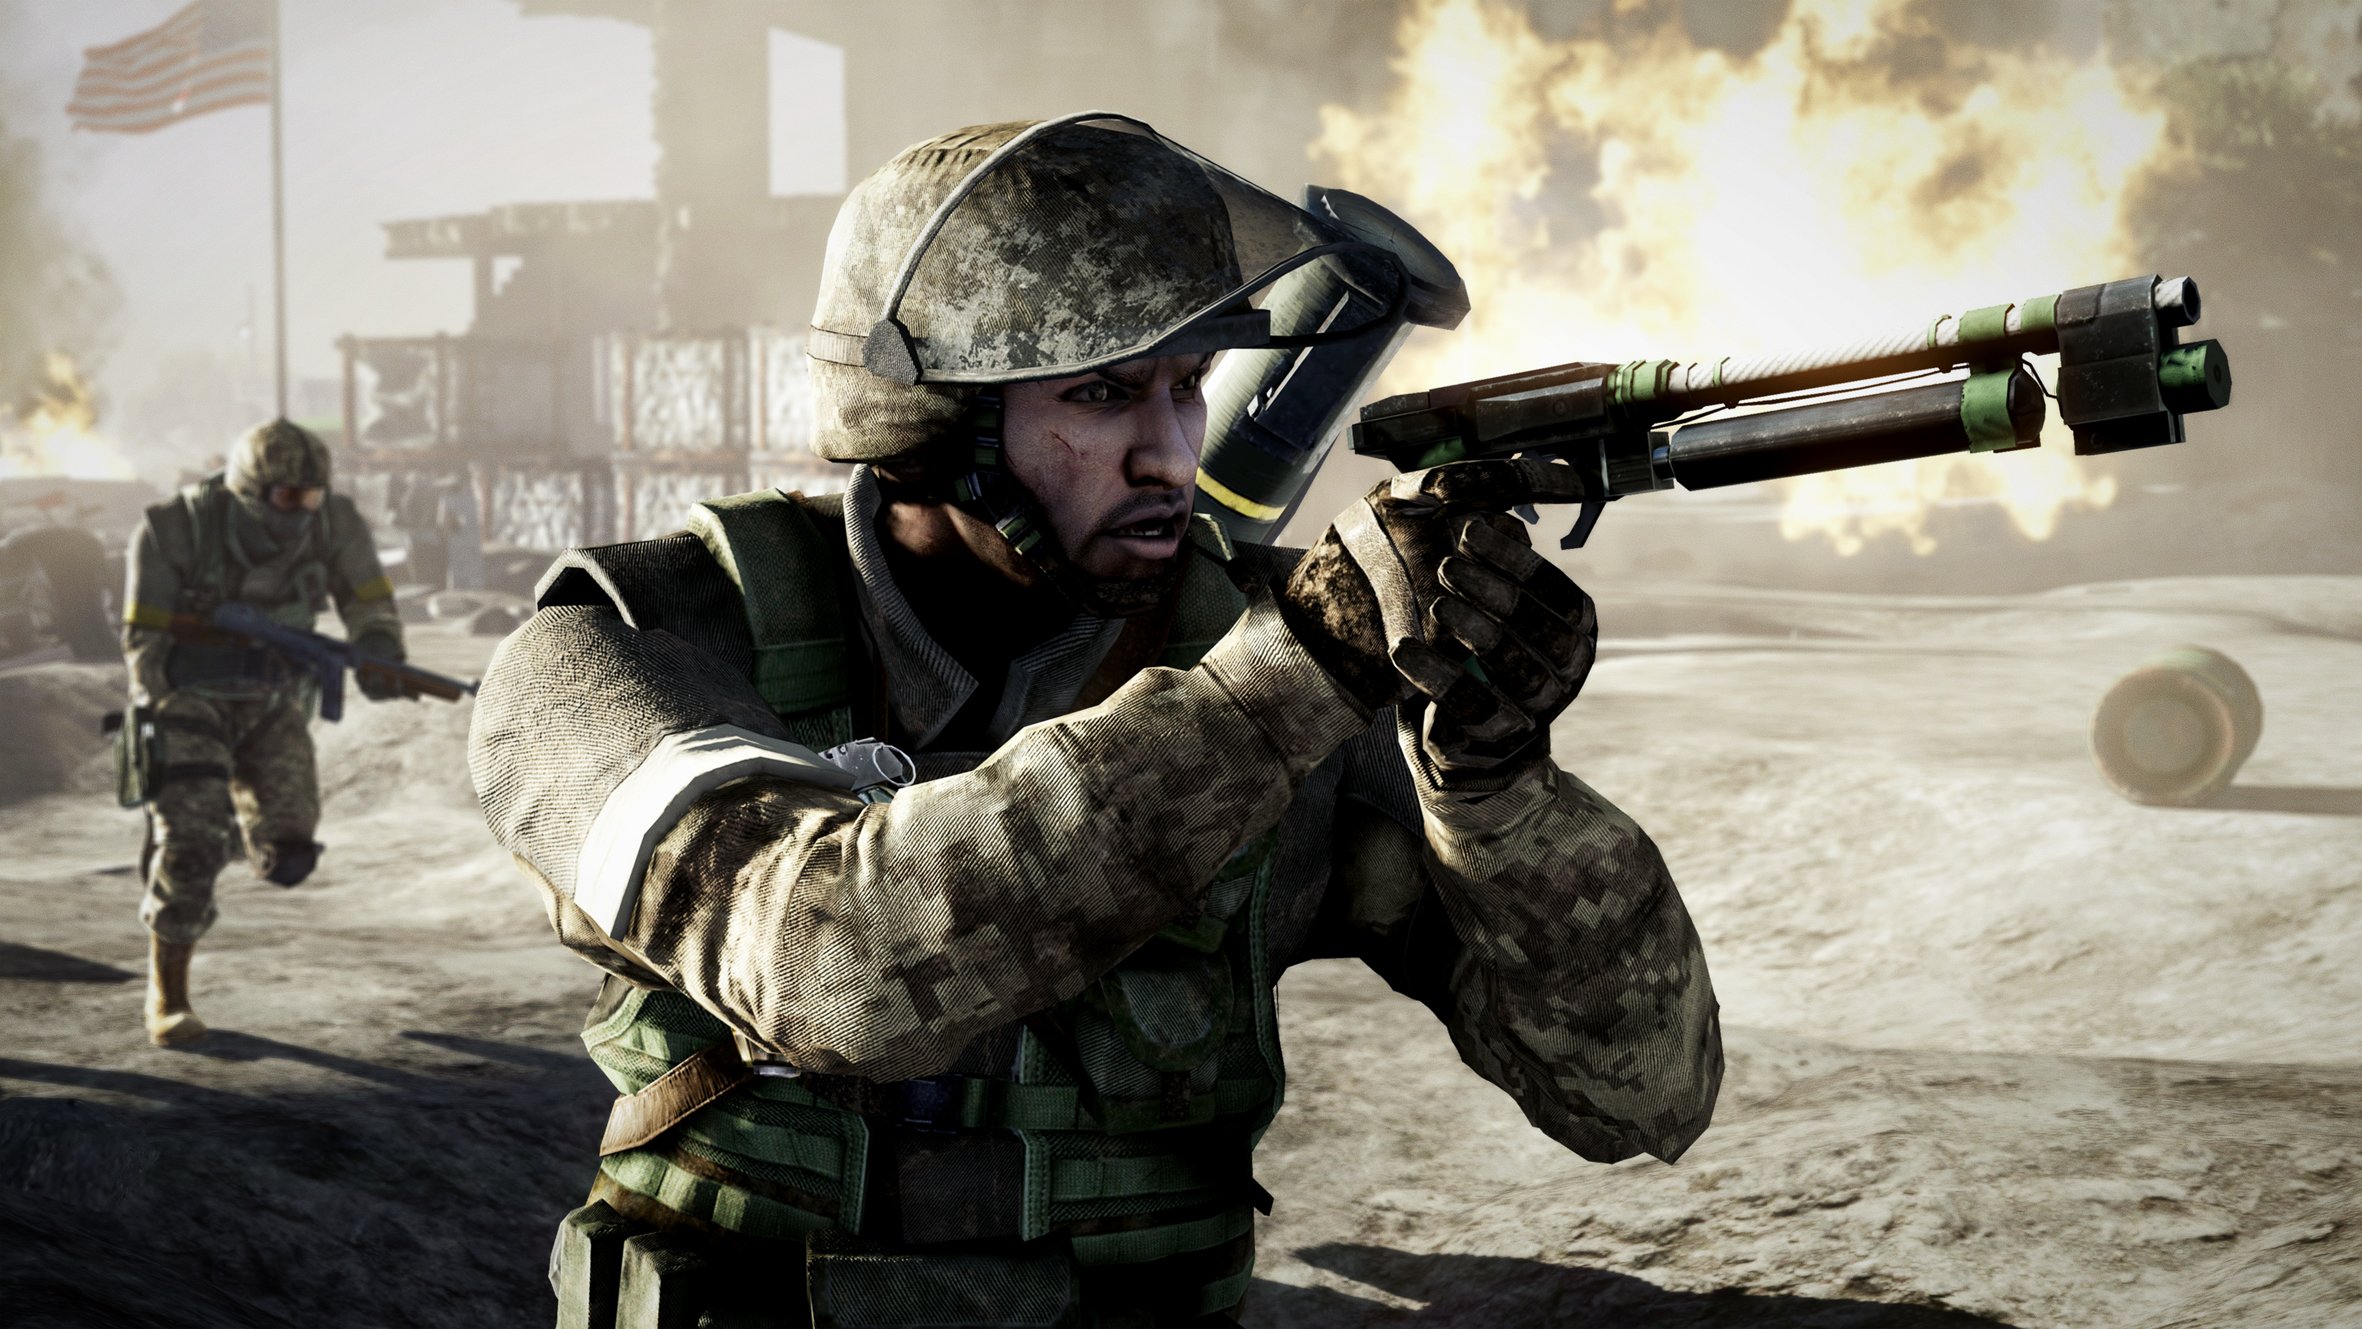 Battlefield Bad Company 2 - PC